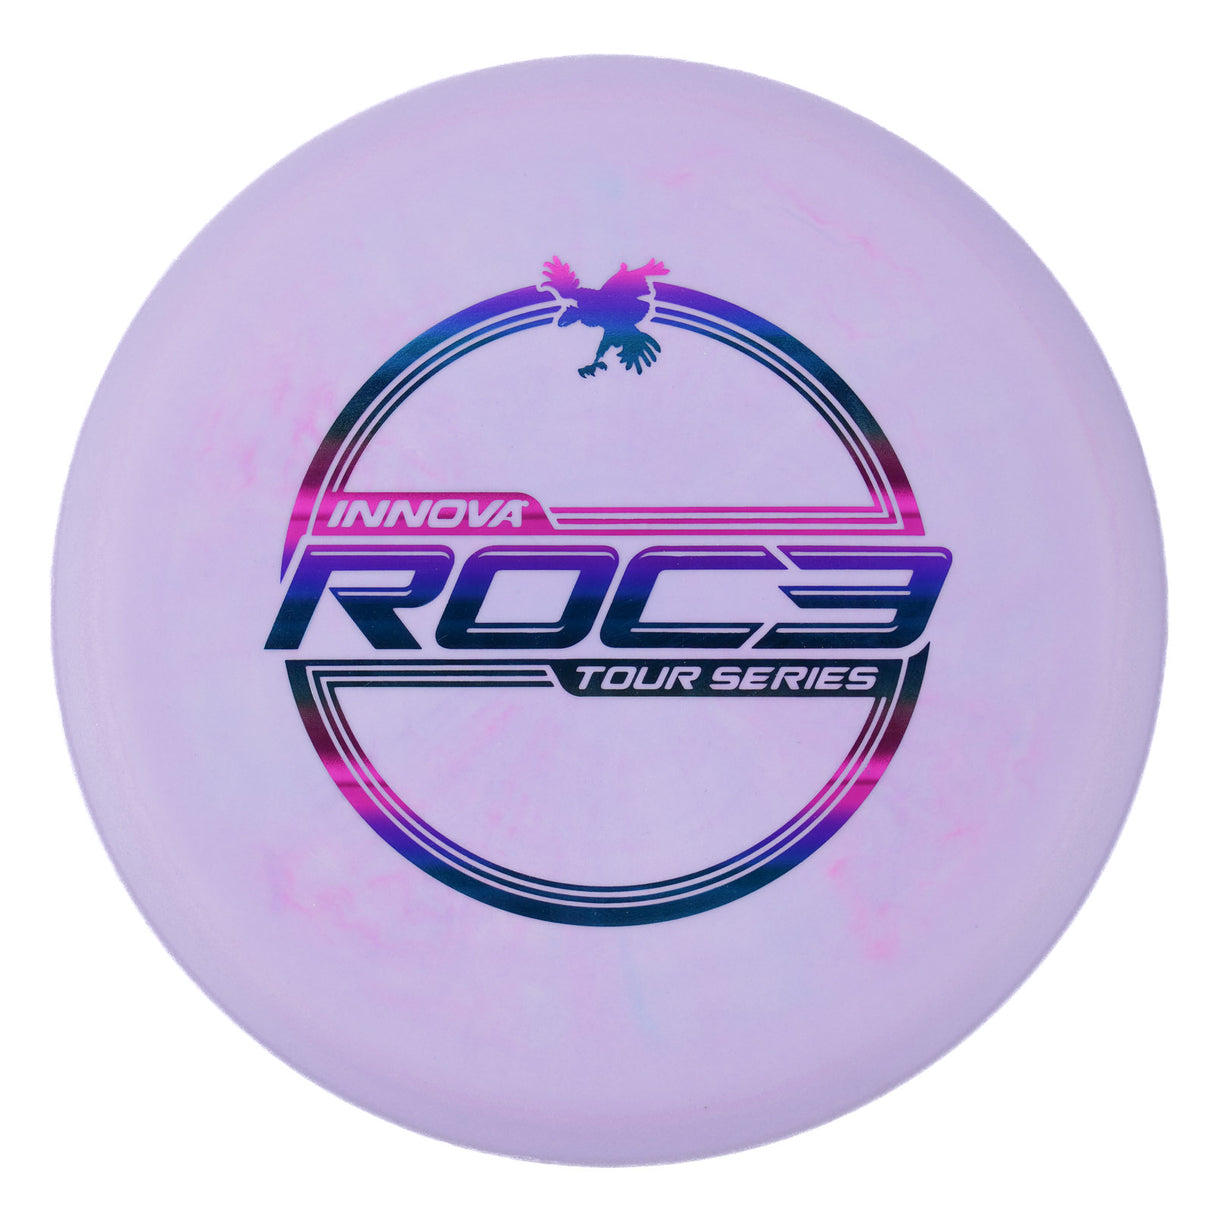 Innova Roc3 - Tour Series Pro Color Glow 180g | Style 0001